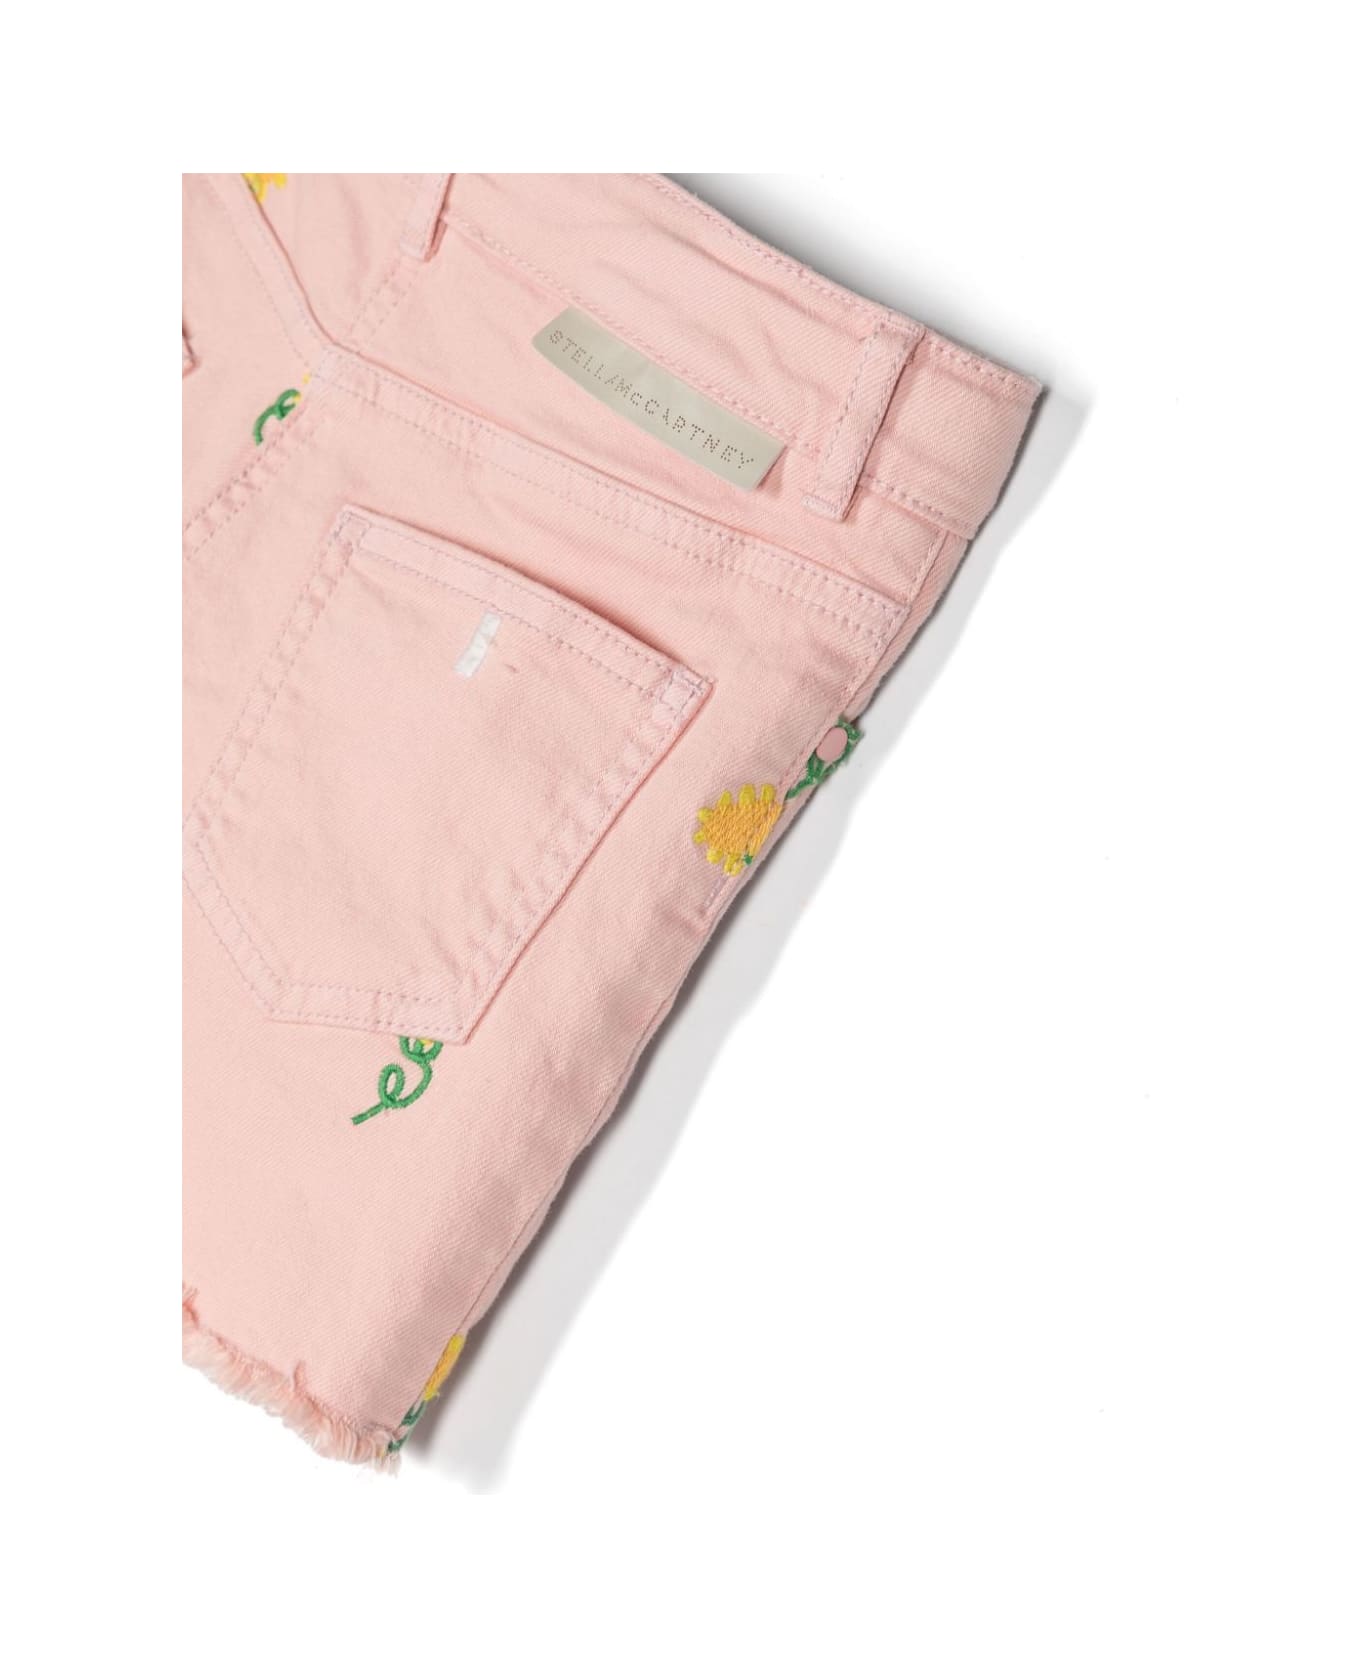 Stella McCartney Kids Shorts - Em Pink Embroidery ボトムス